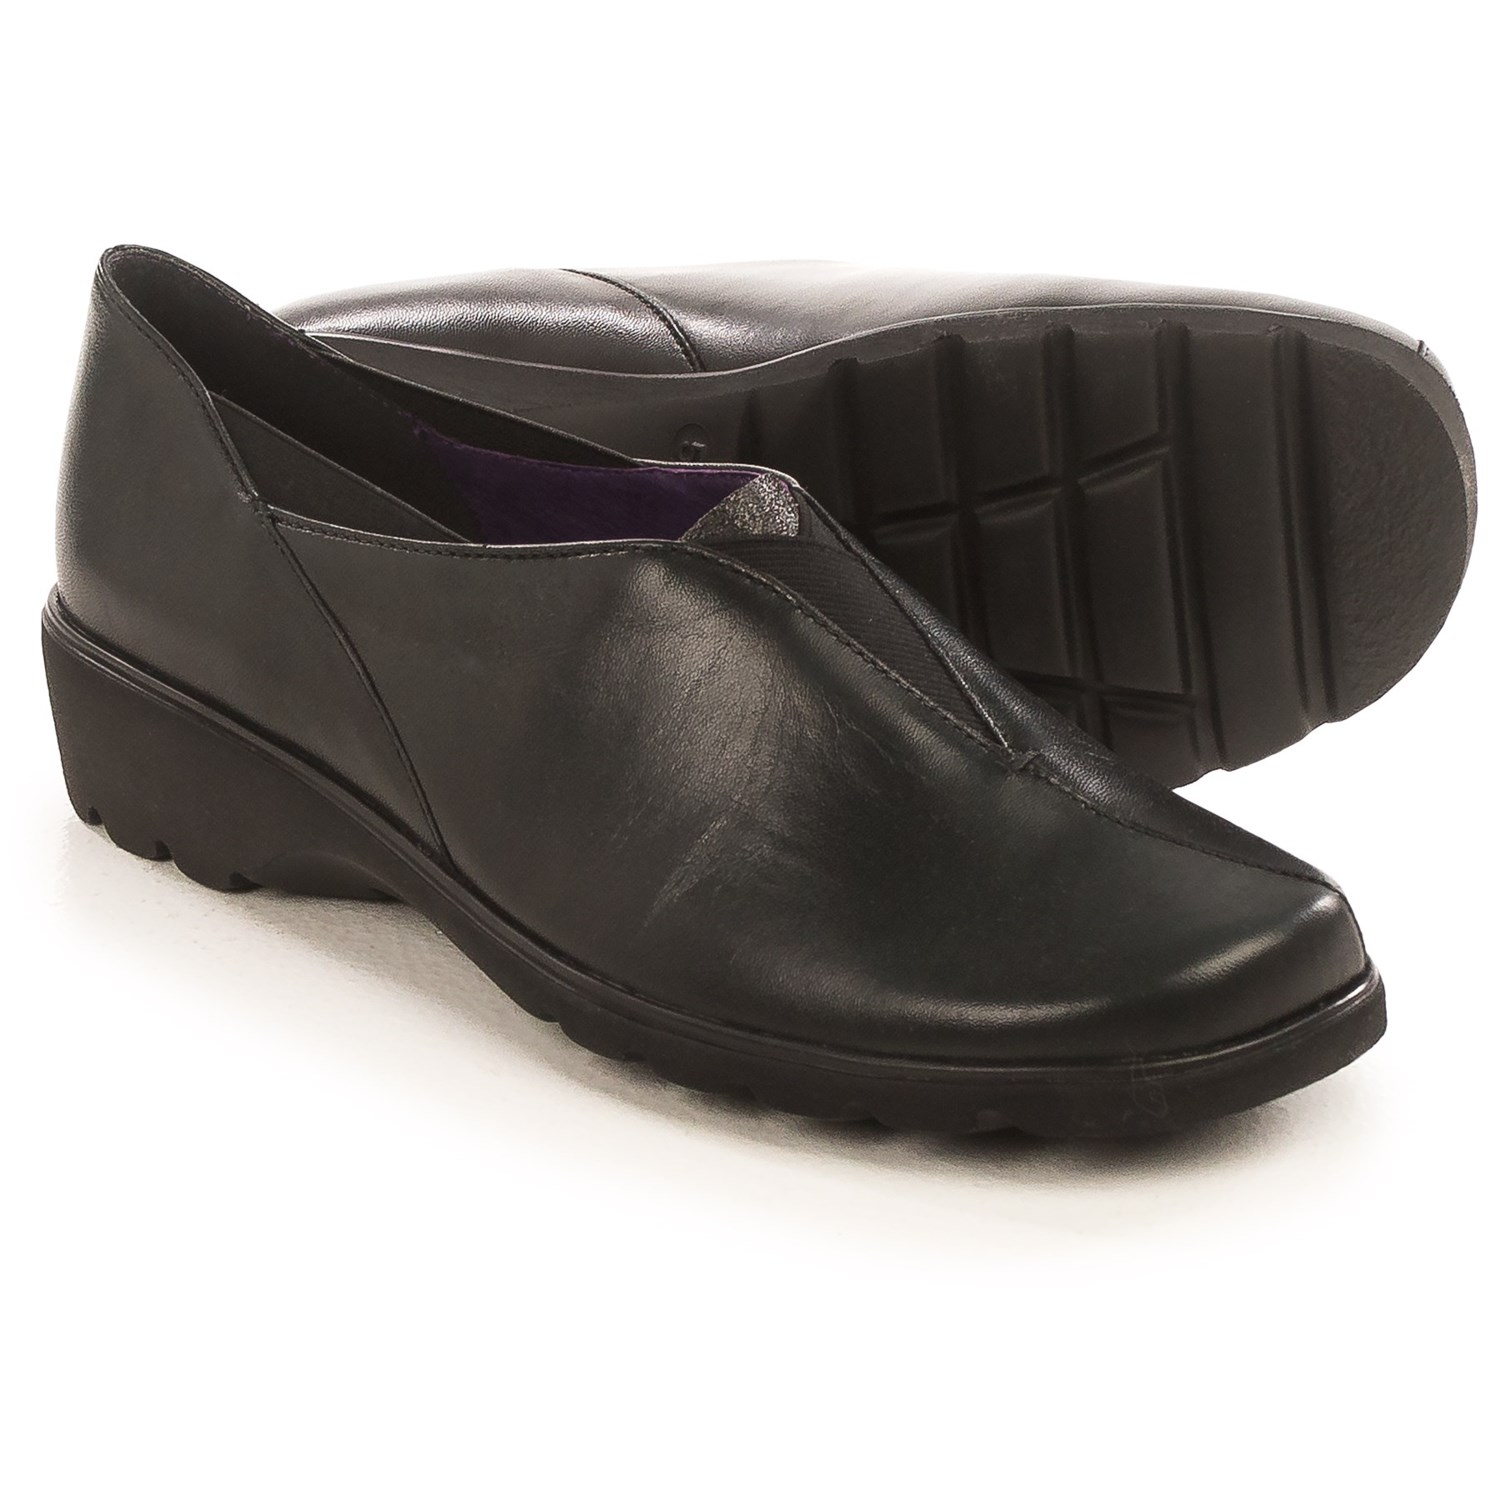 Ara Adel Slip-On Shoes (For Women) - Save 86%